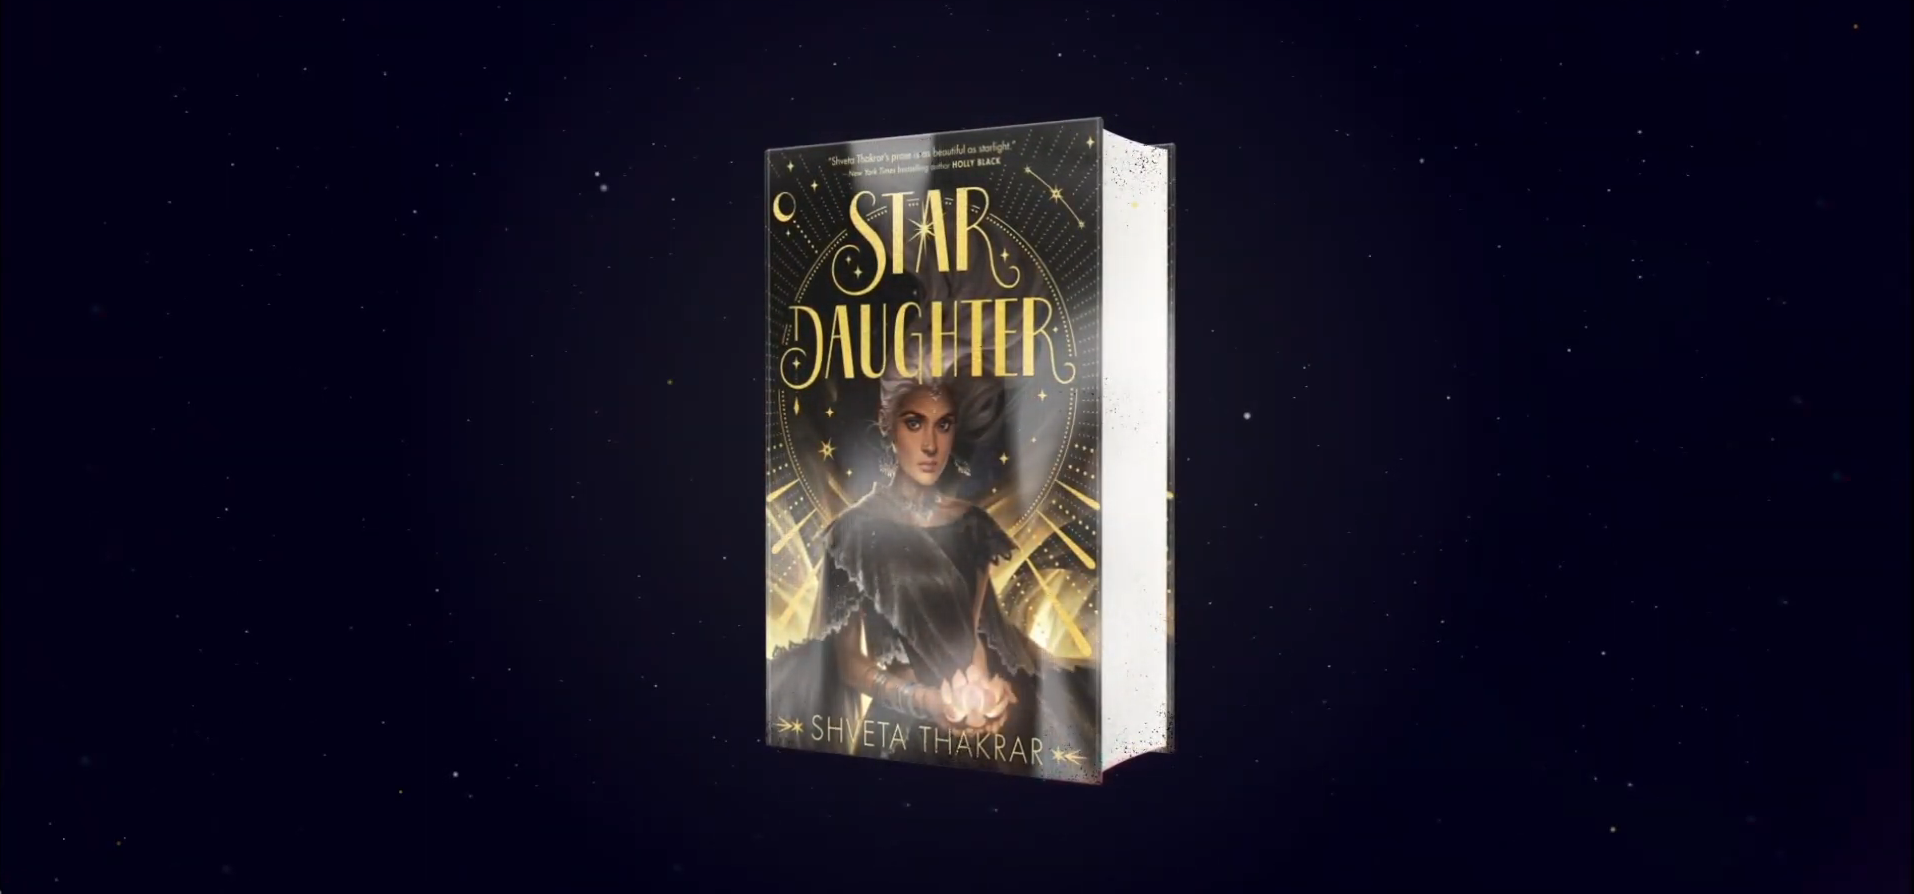 Book "Star Daughter" by Shveta Thakrar on black background